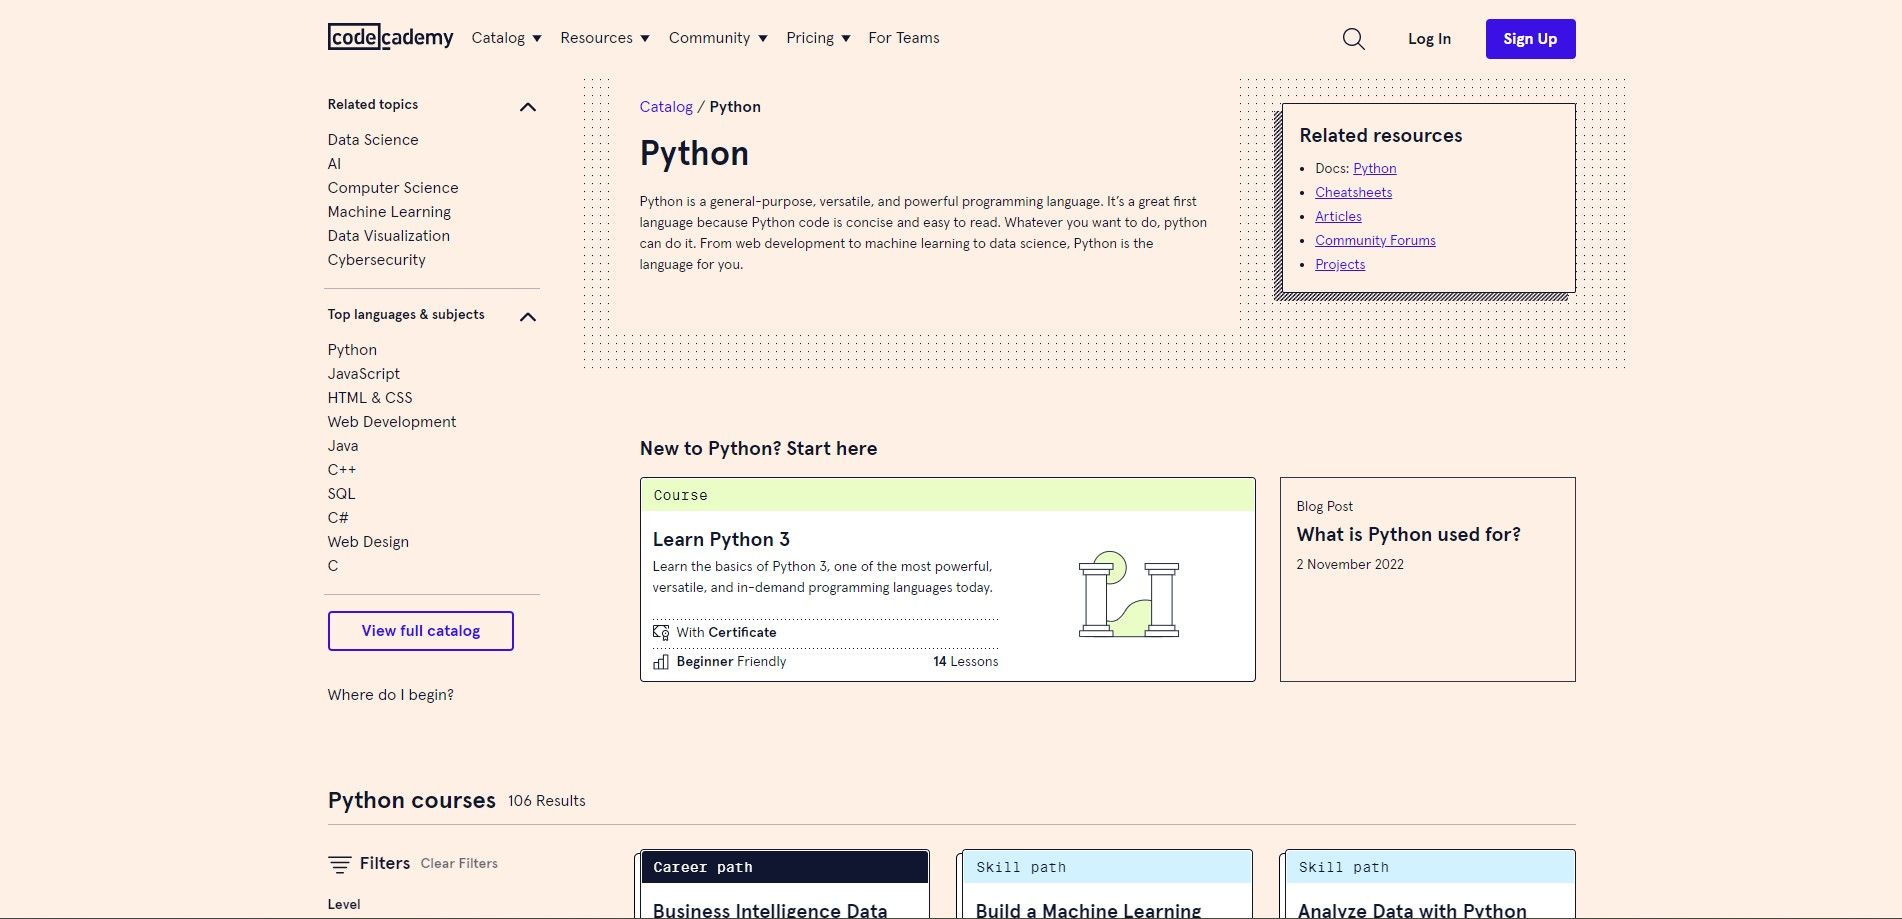 Codecademy list of Python courses